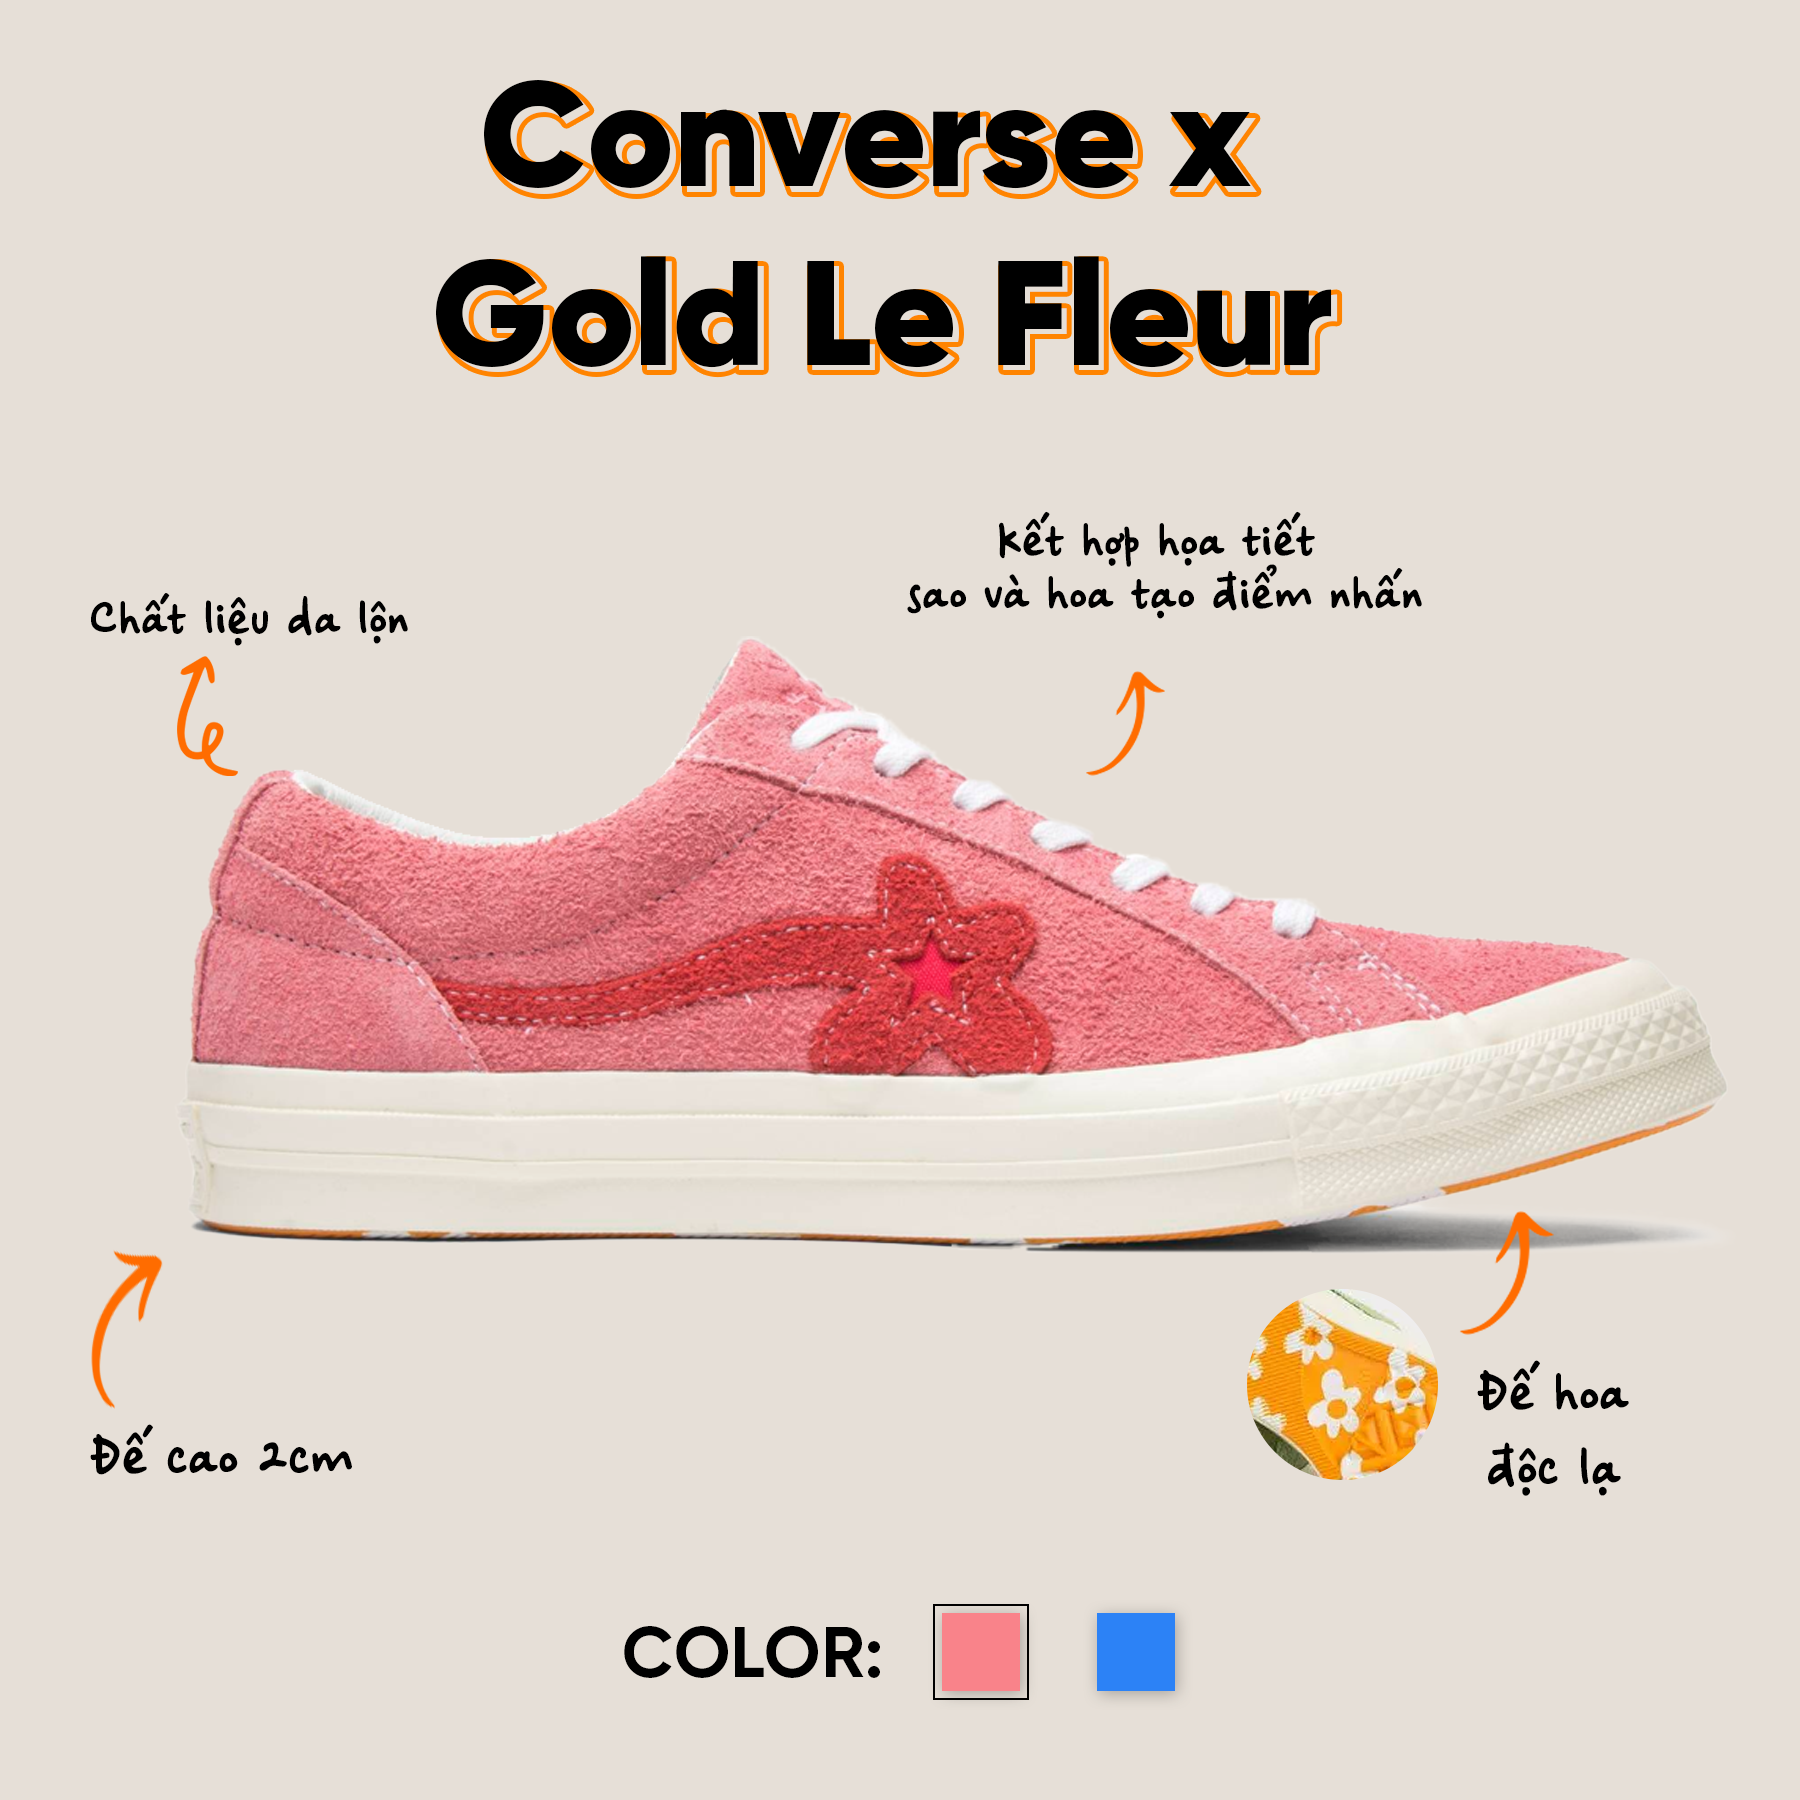 Converse X Golf Le Fleur — Converse